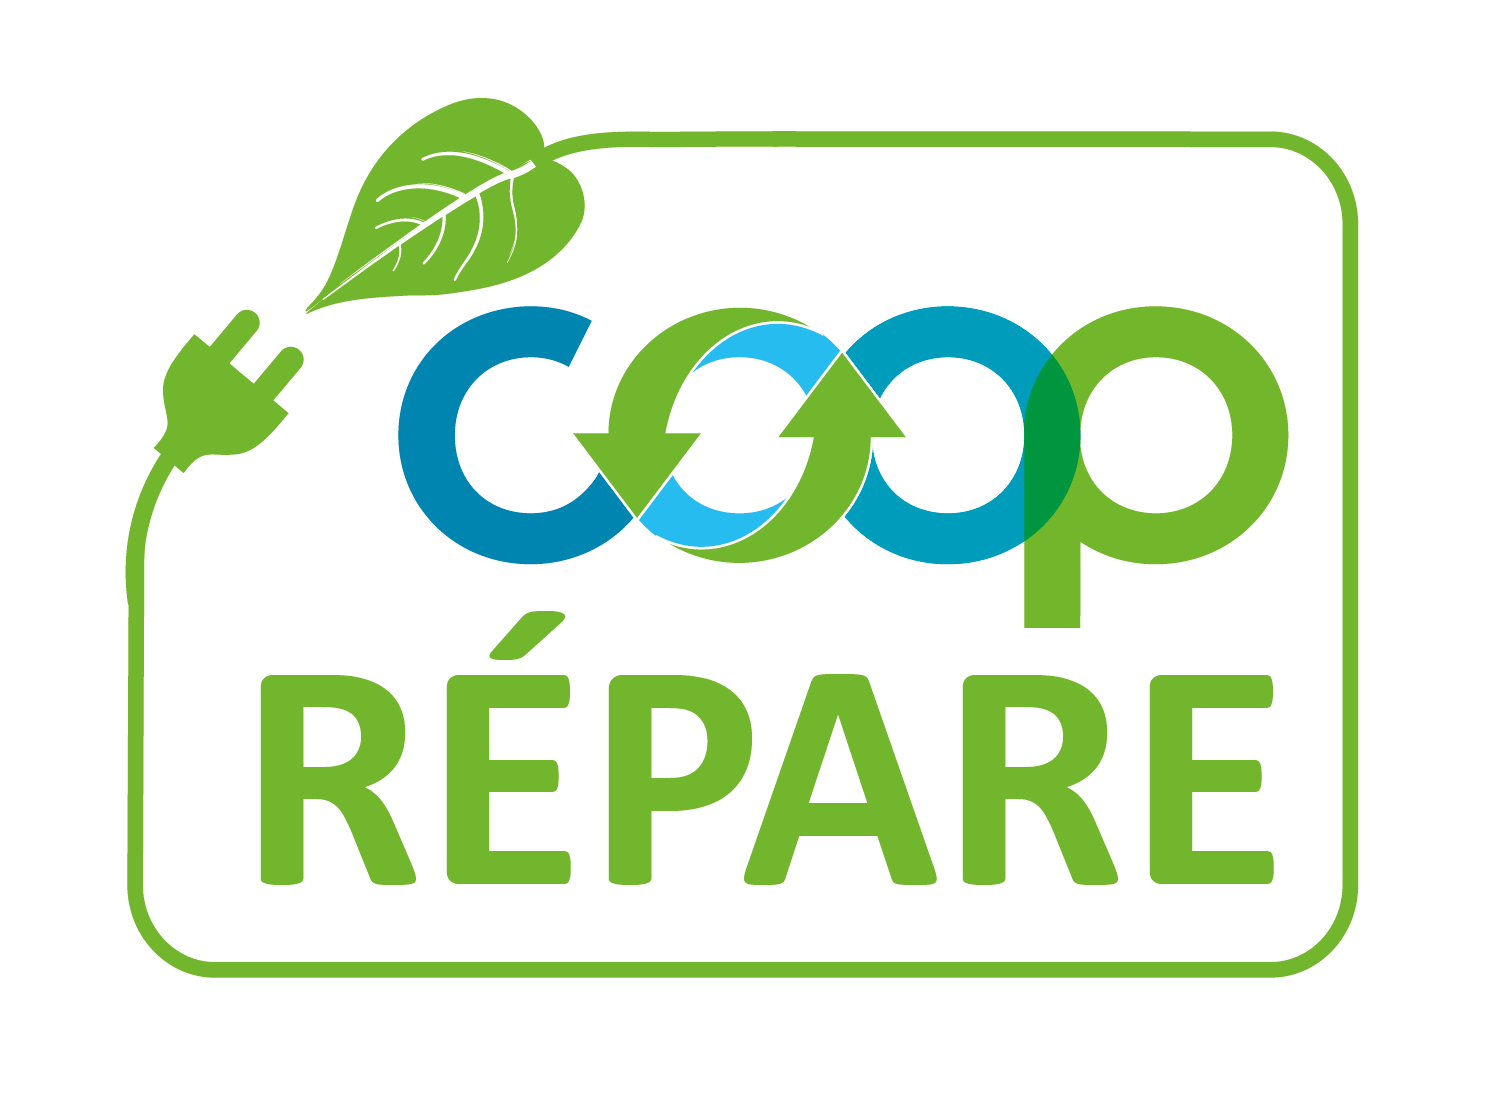 coop repare